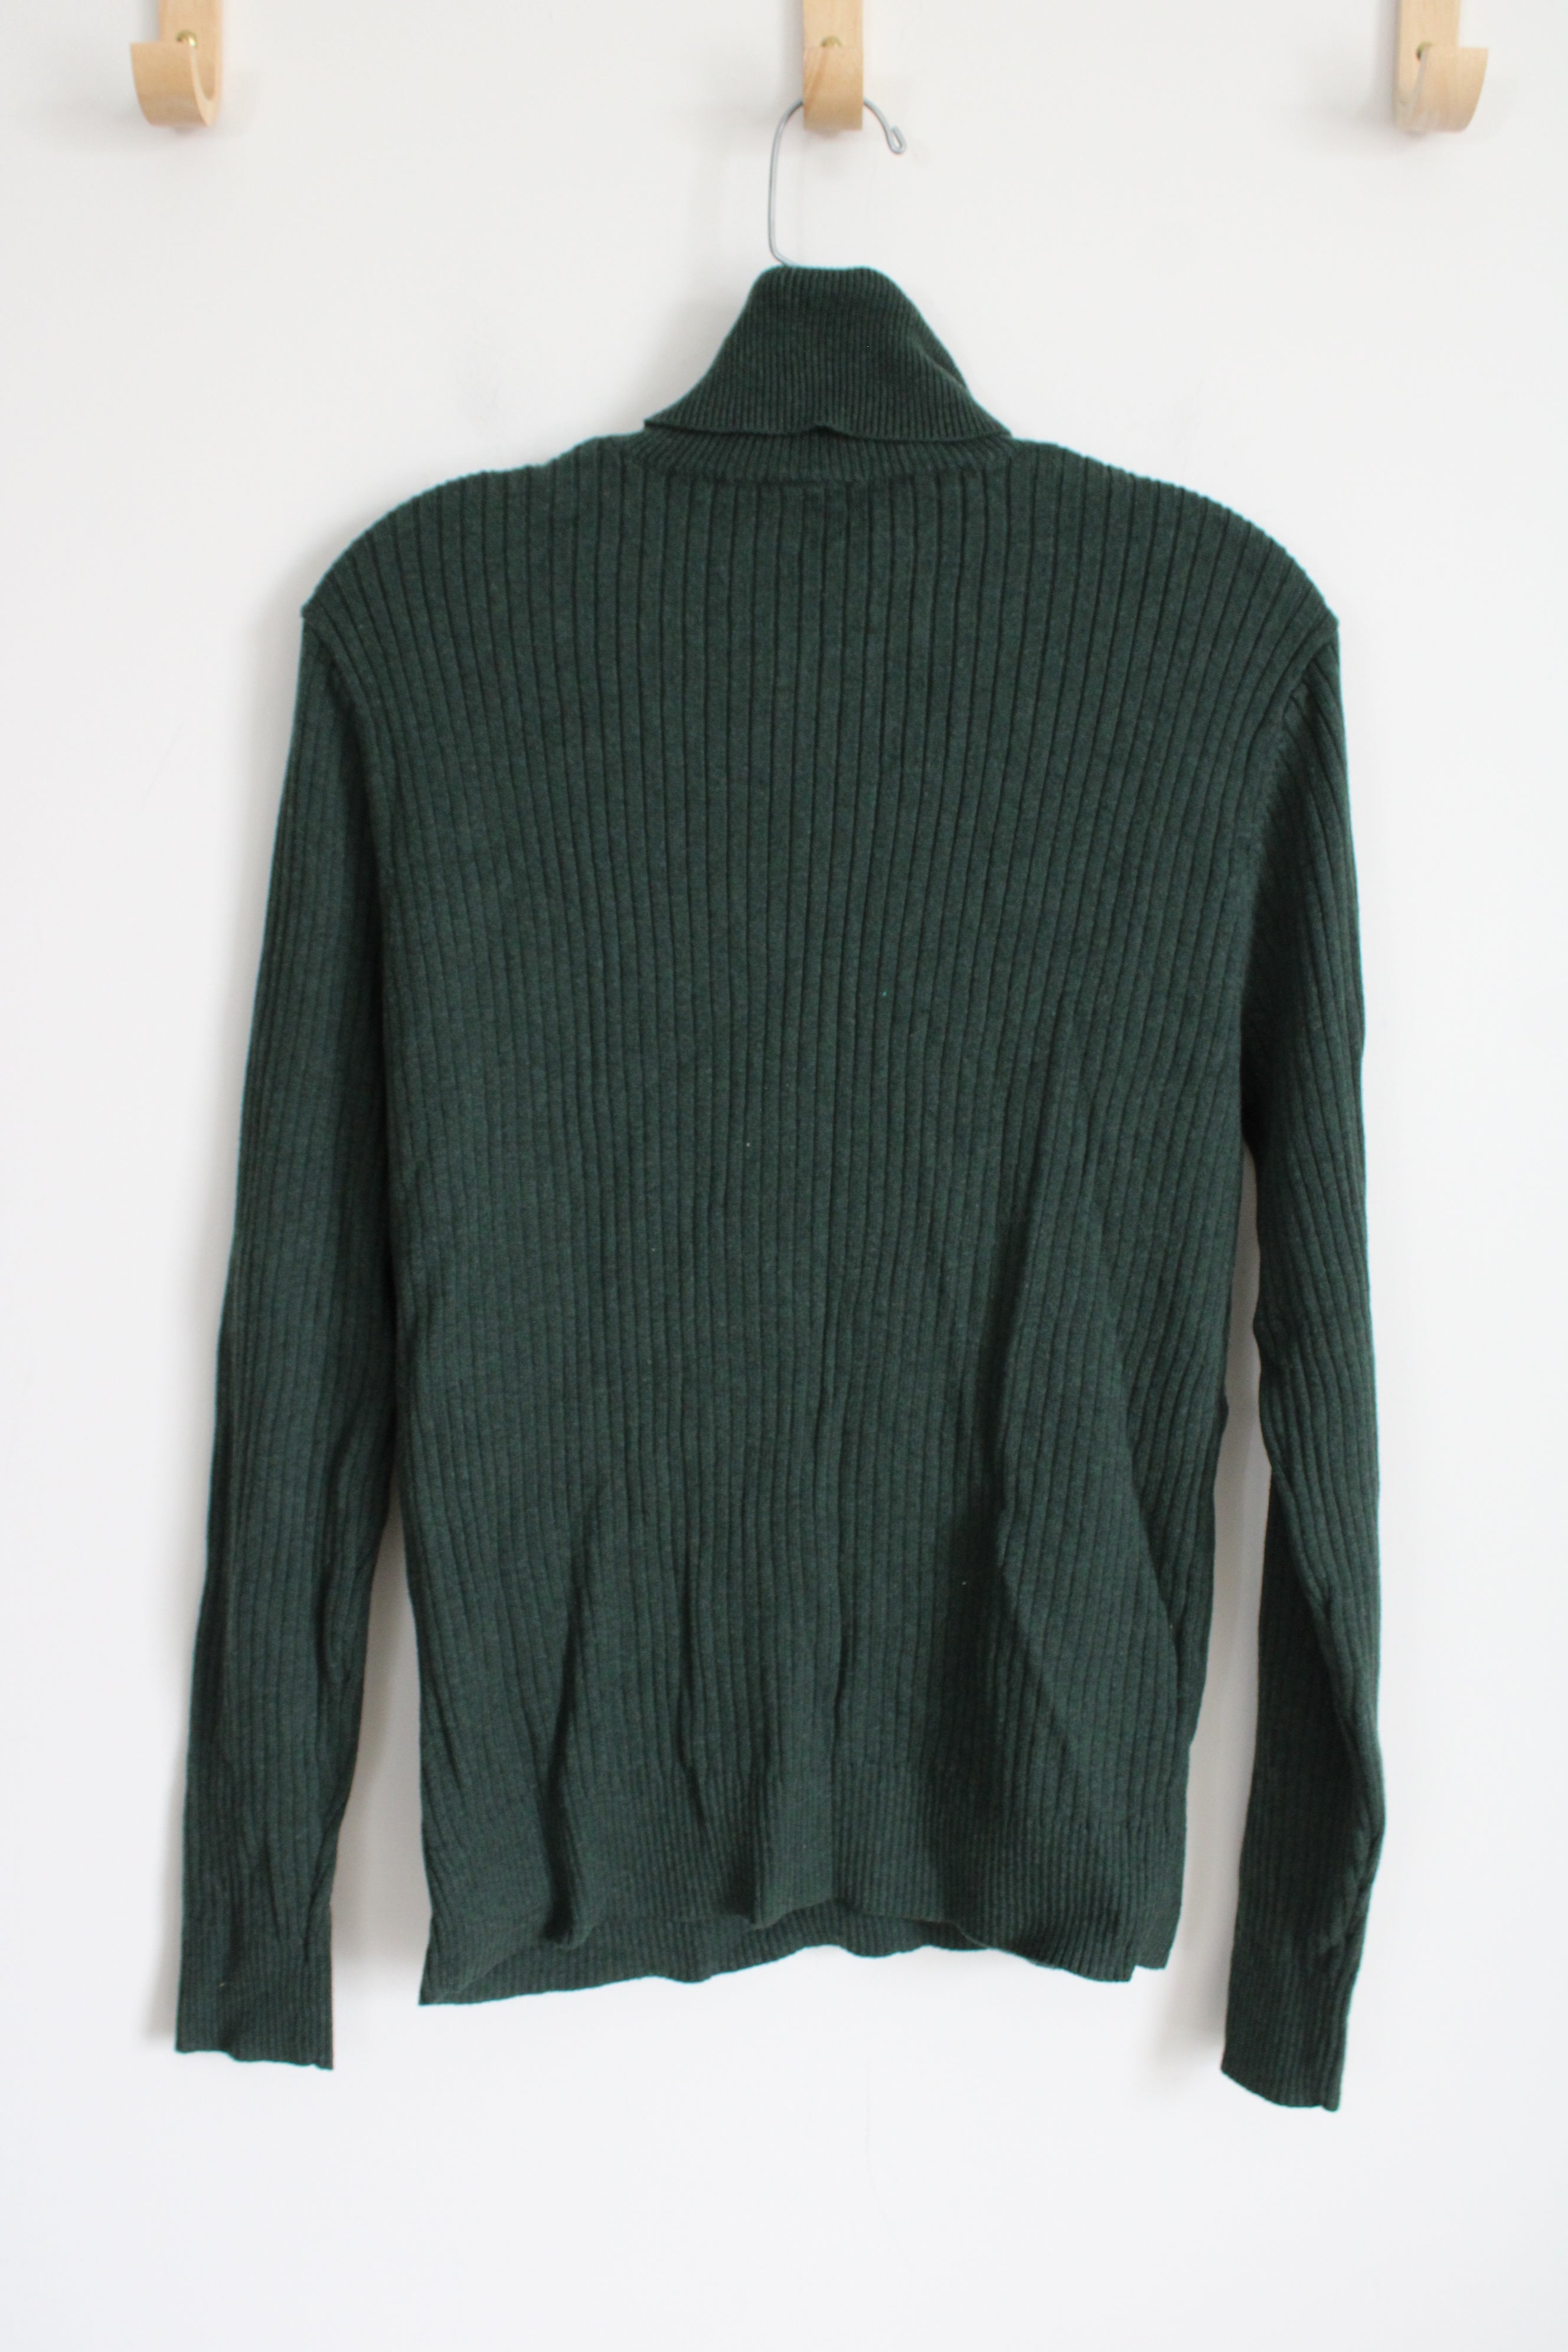 Gap Vintage Dark Gray Ribbed Turtleneck Sweater | M